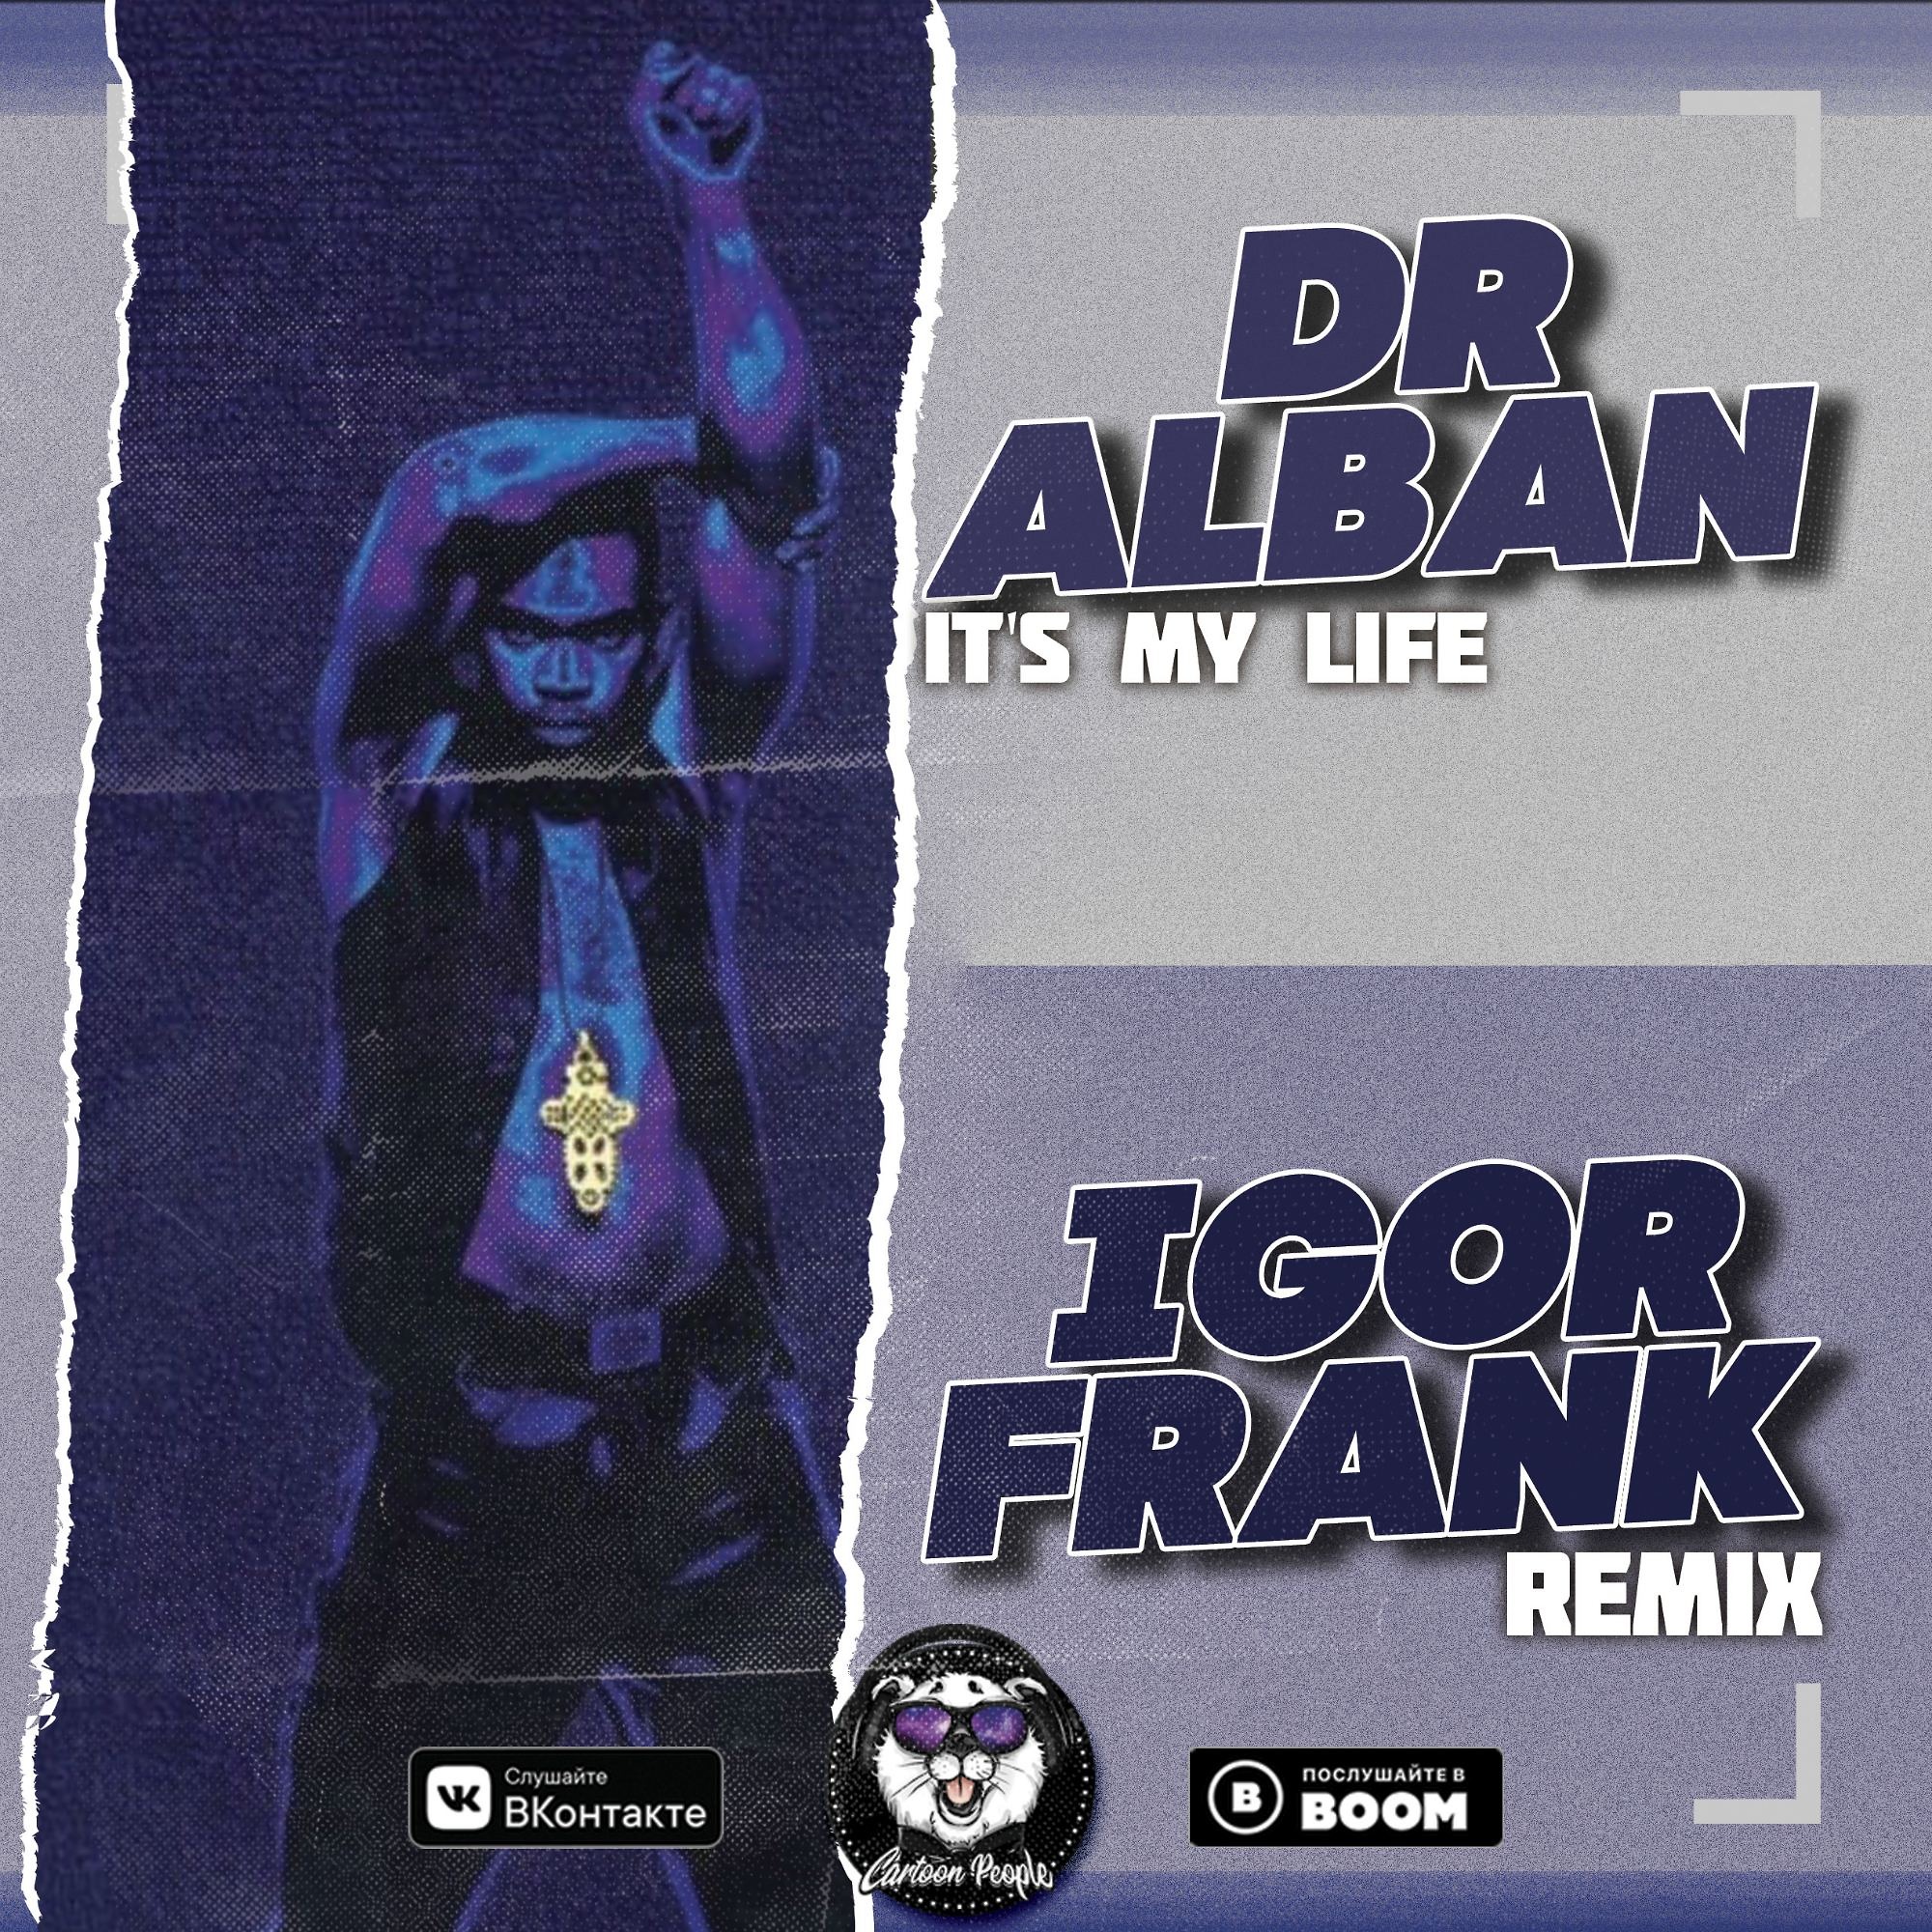 Албан итс май лайф слушать. Dr Alban it's my Life. It s my Life доктор албан. DJ Alban its my Life. ИТС май лайф доктор.